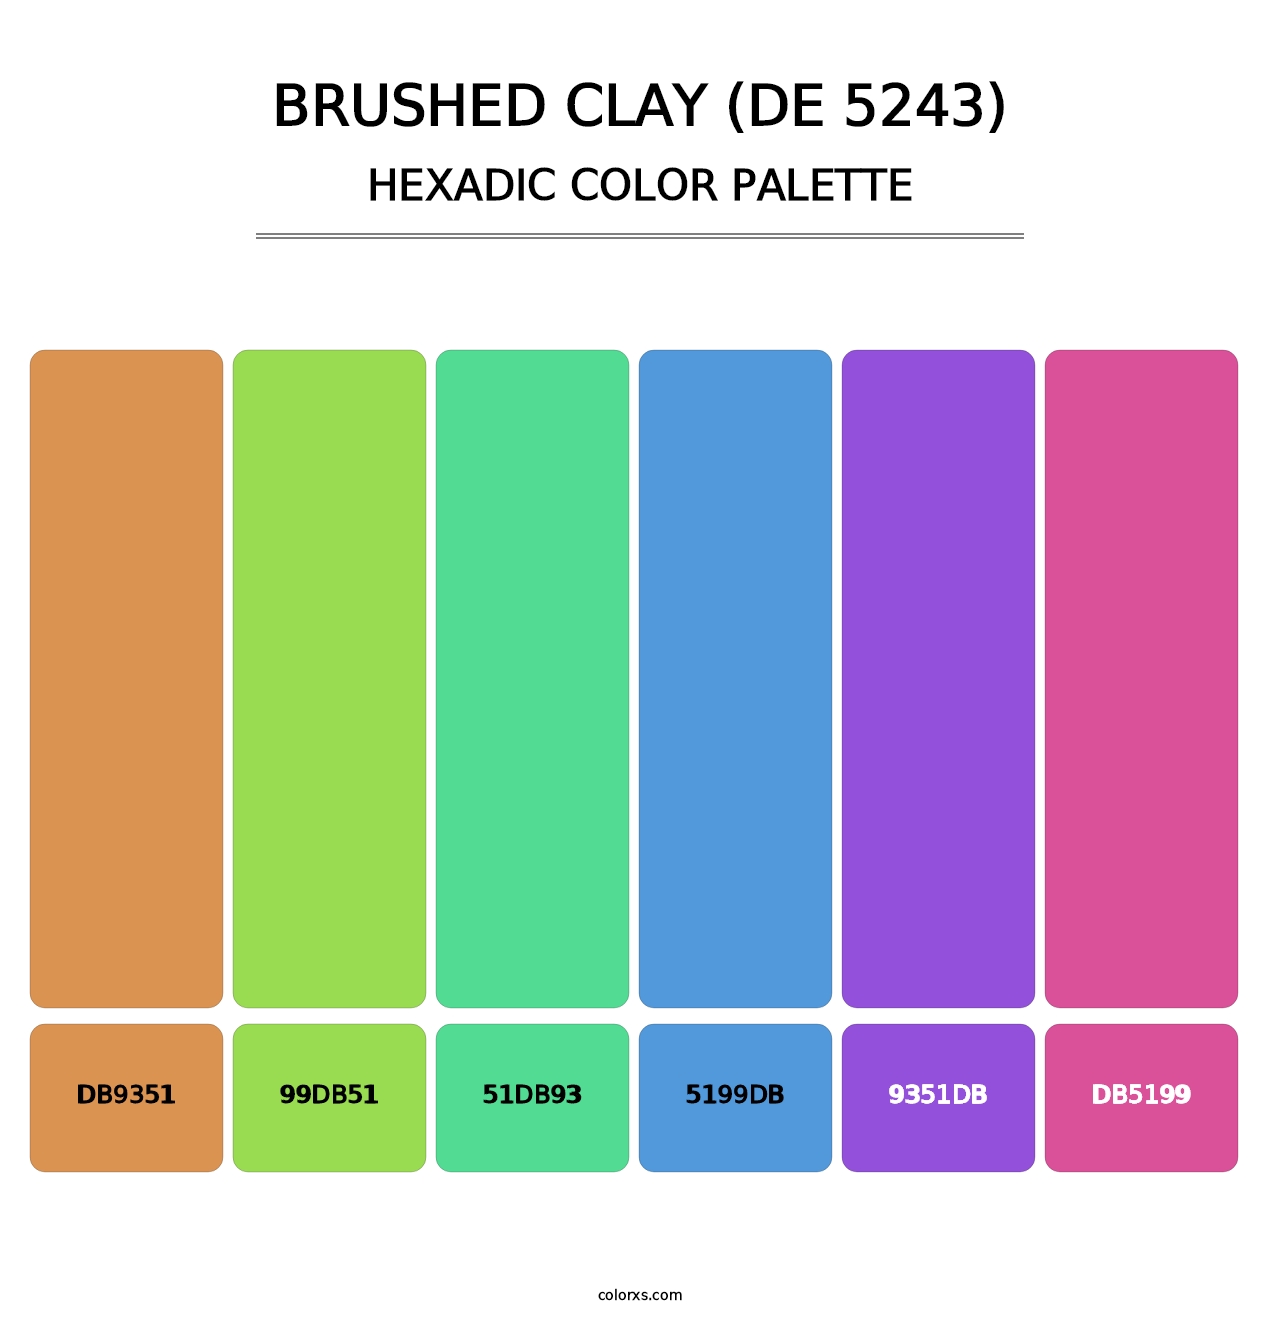 Brushed Clay (DE 5243) - Hexadic Color Palette